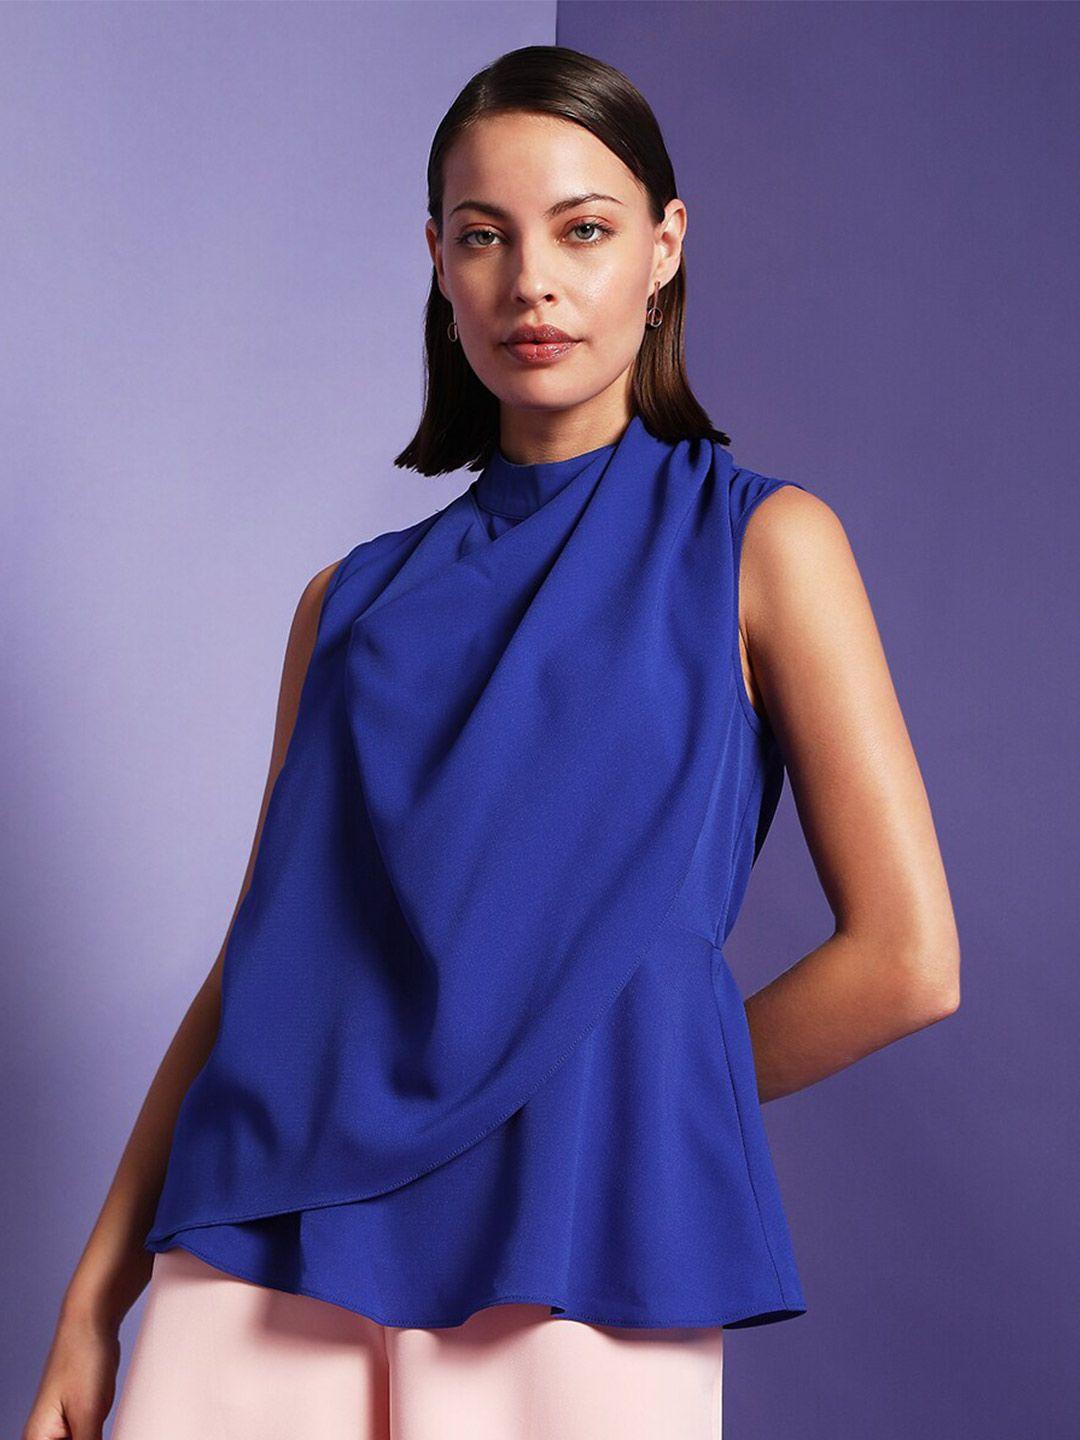 vero-moda-marquee-collection-women-blue-solid-top